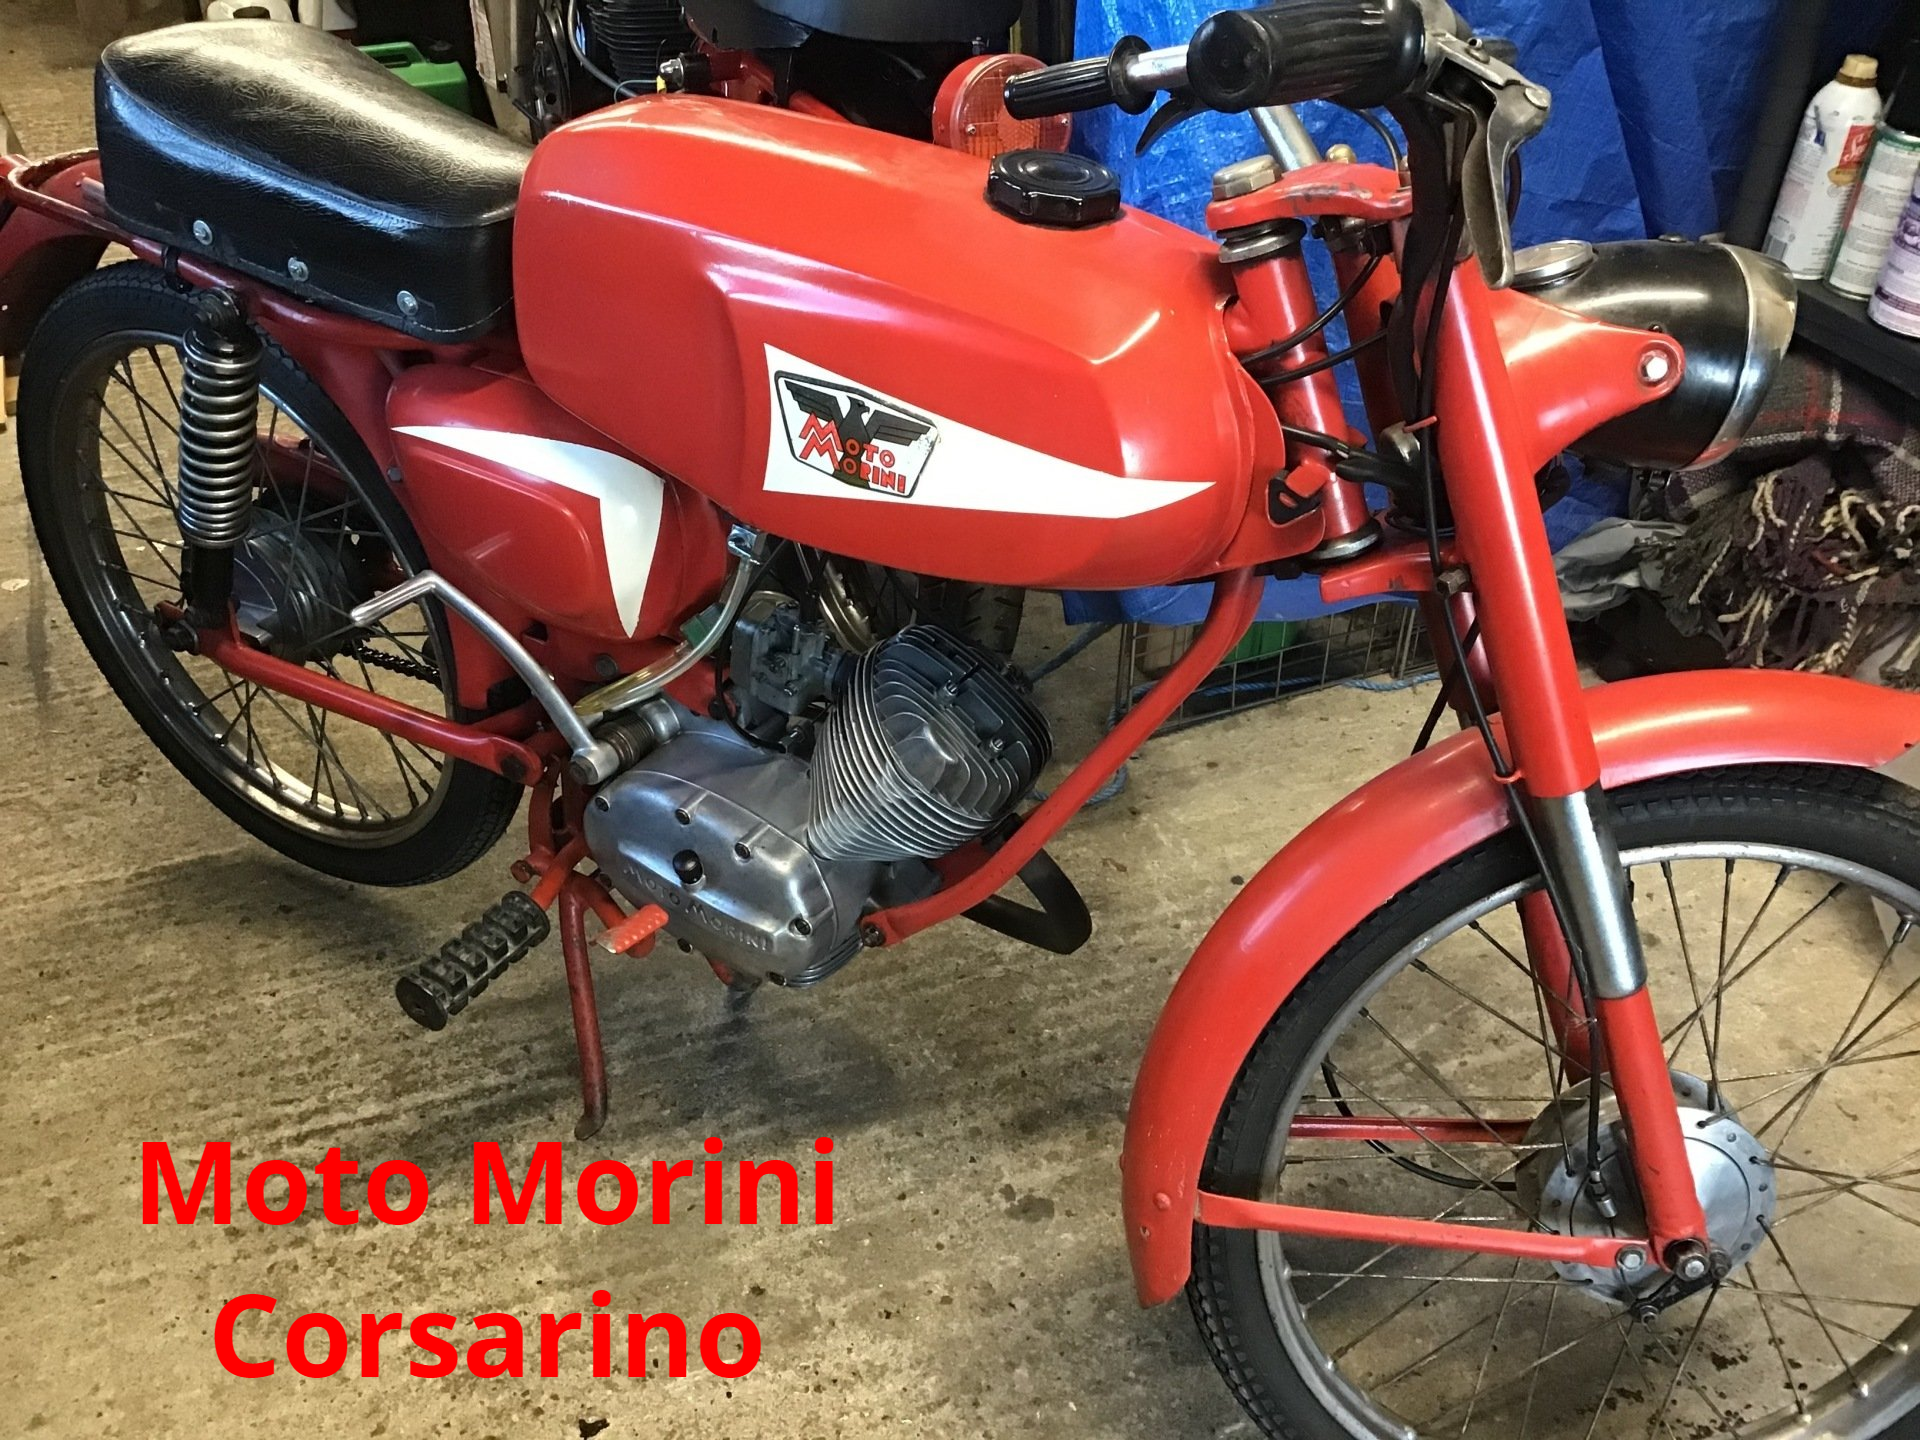 Moto Morini Corsarino